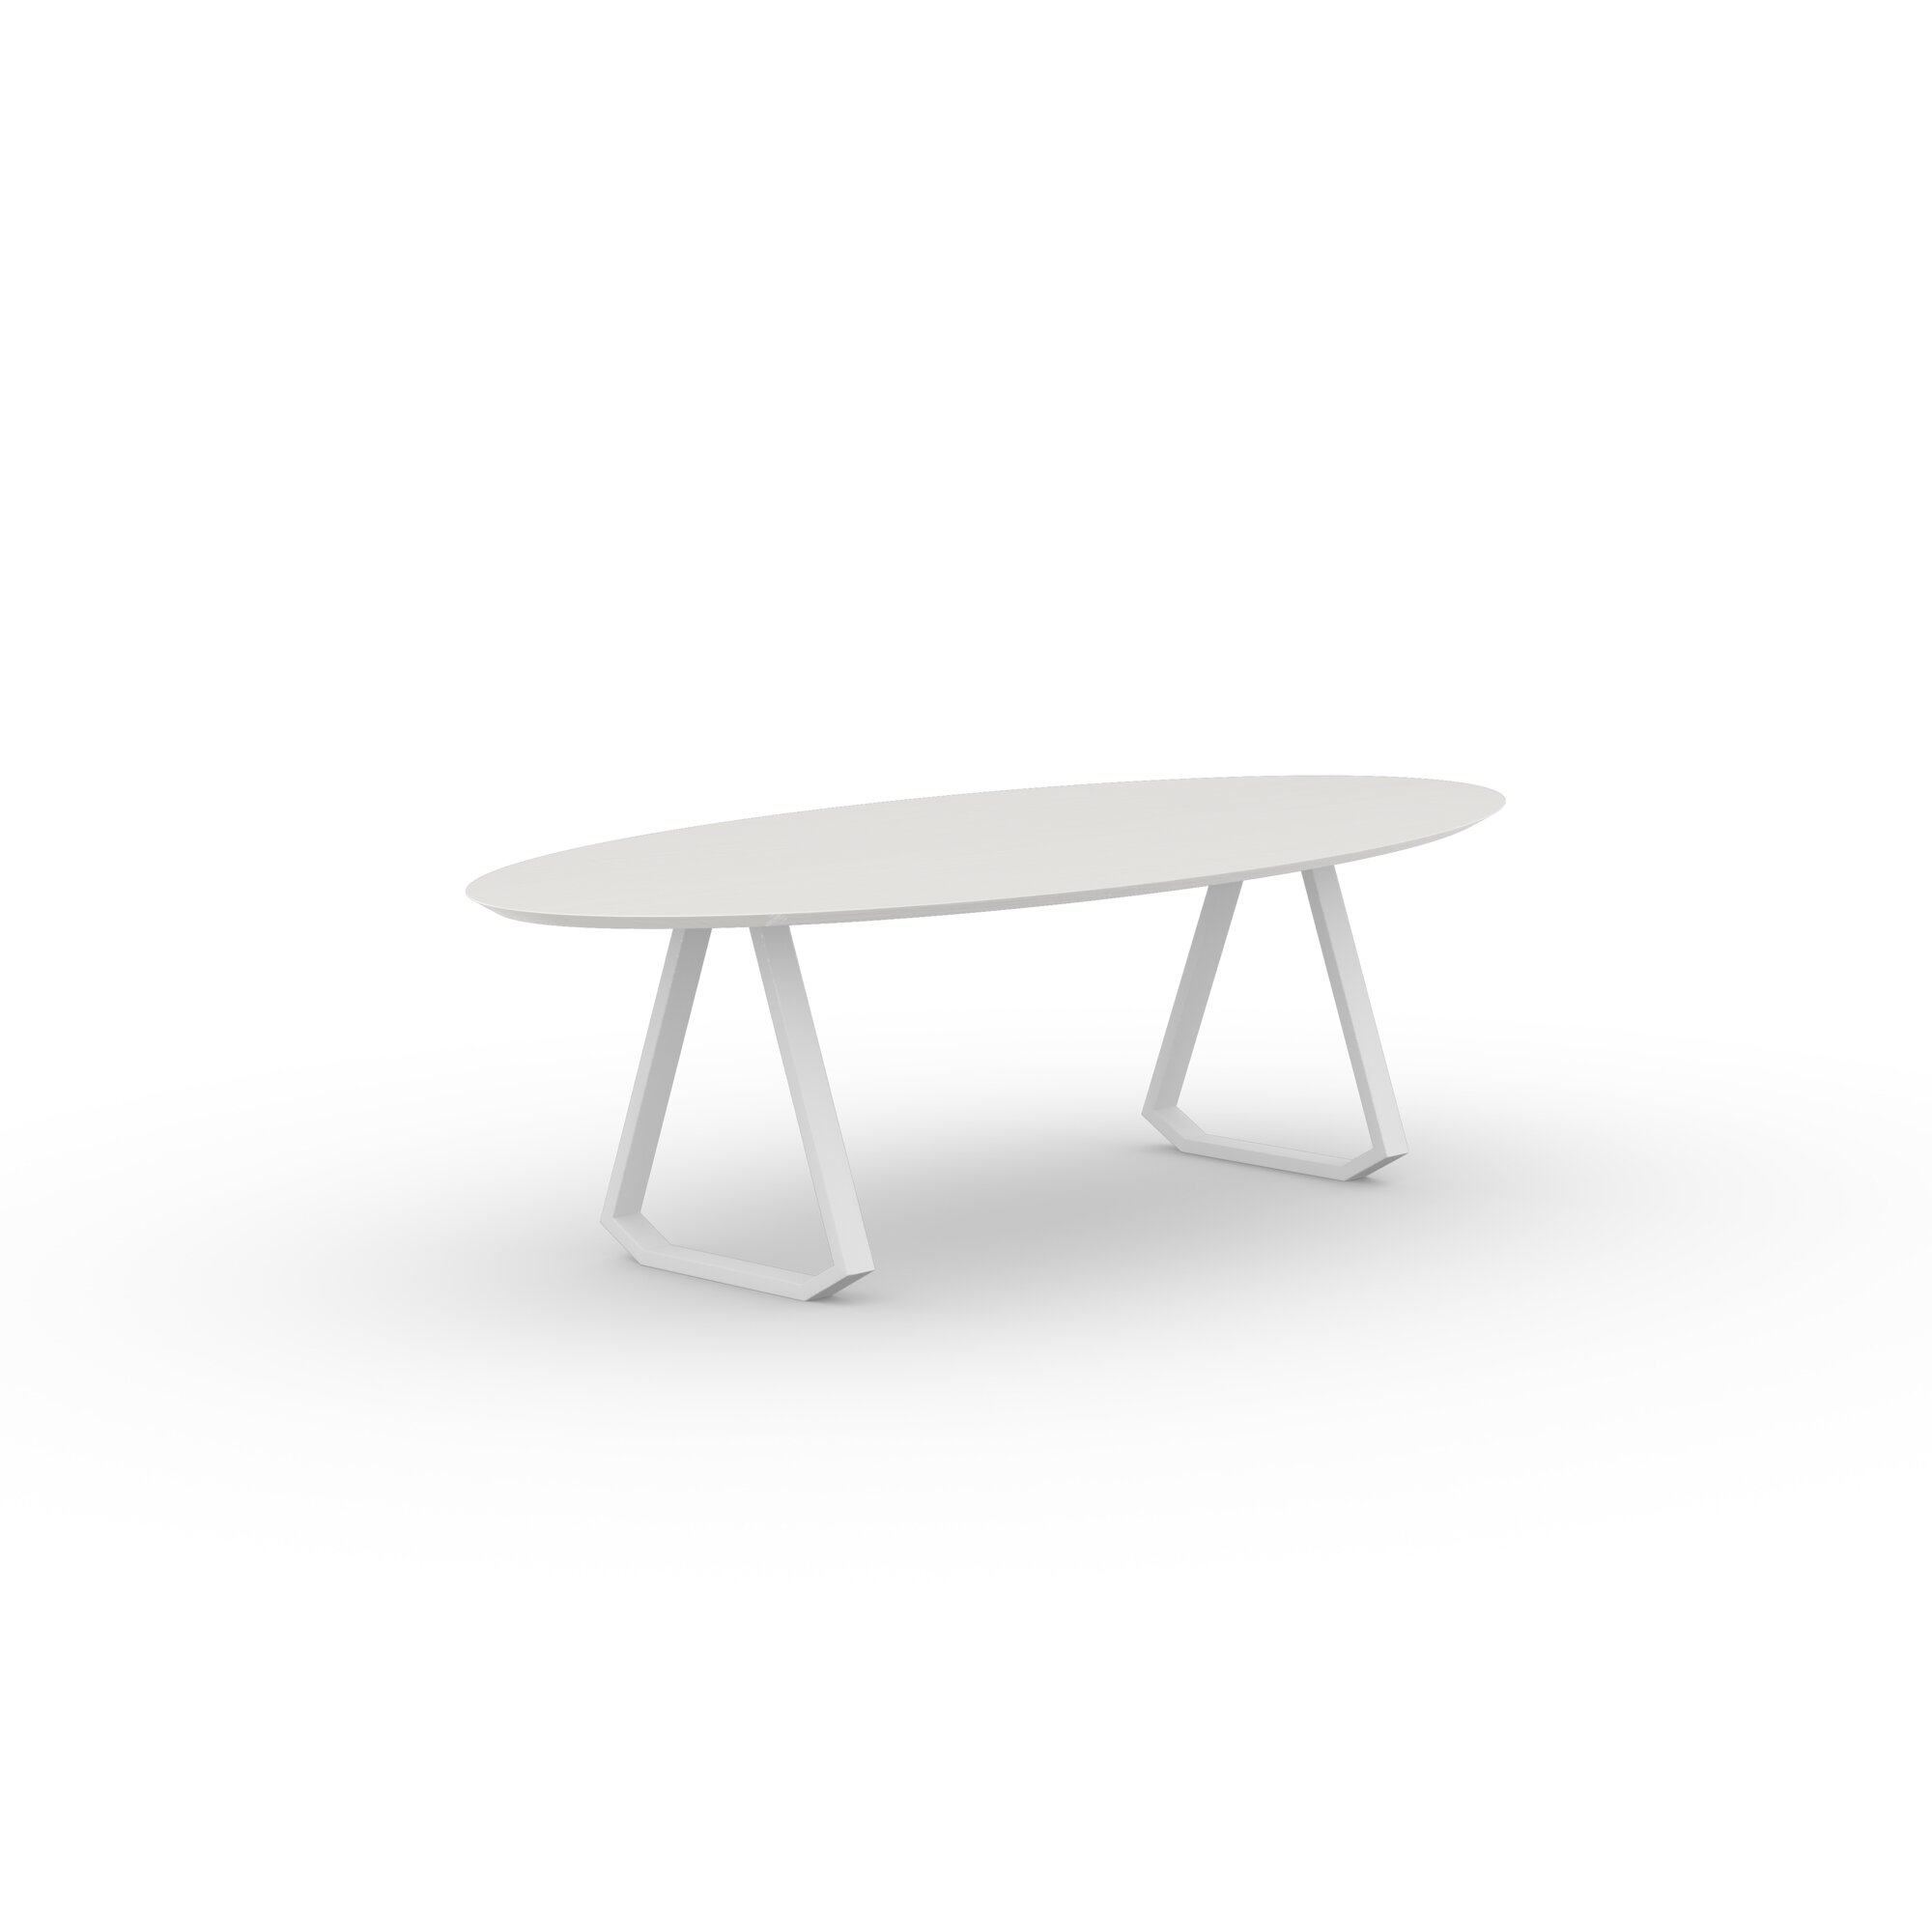 Ovale Design dining table | Topple Steel white powdercoating | Oak white lacquer | Studio HENK| 